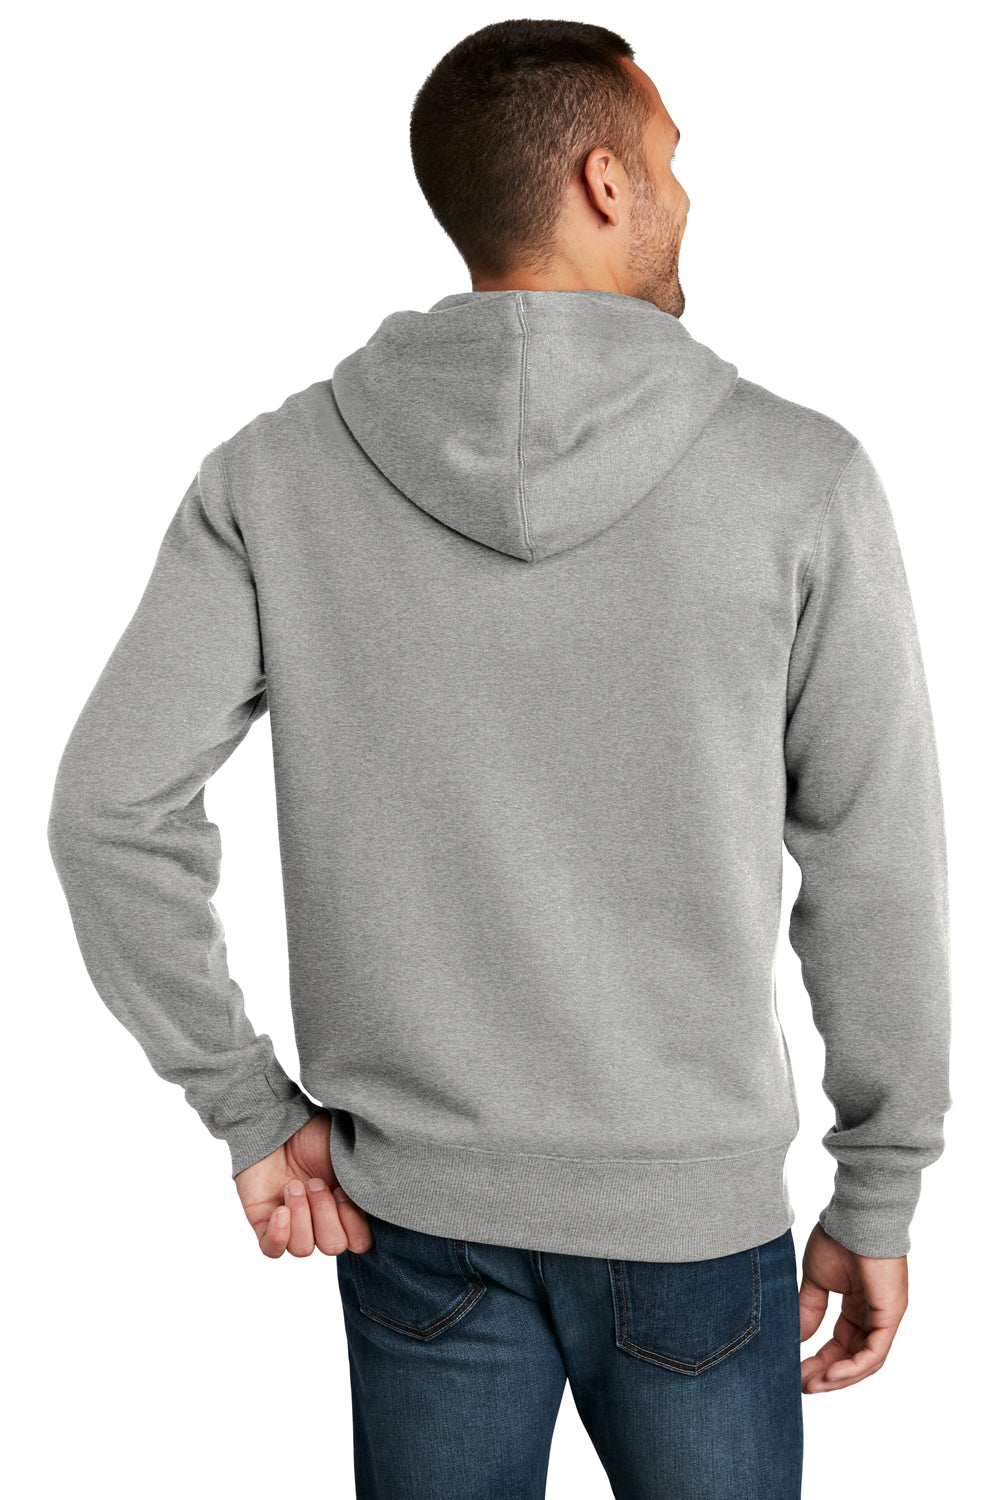 District Mens Perfect Weight Fleece Full Zip Hooded Sweatshirt Hoodie Heather Steel Grey Side